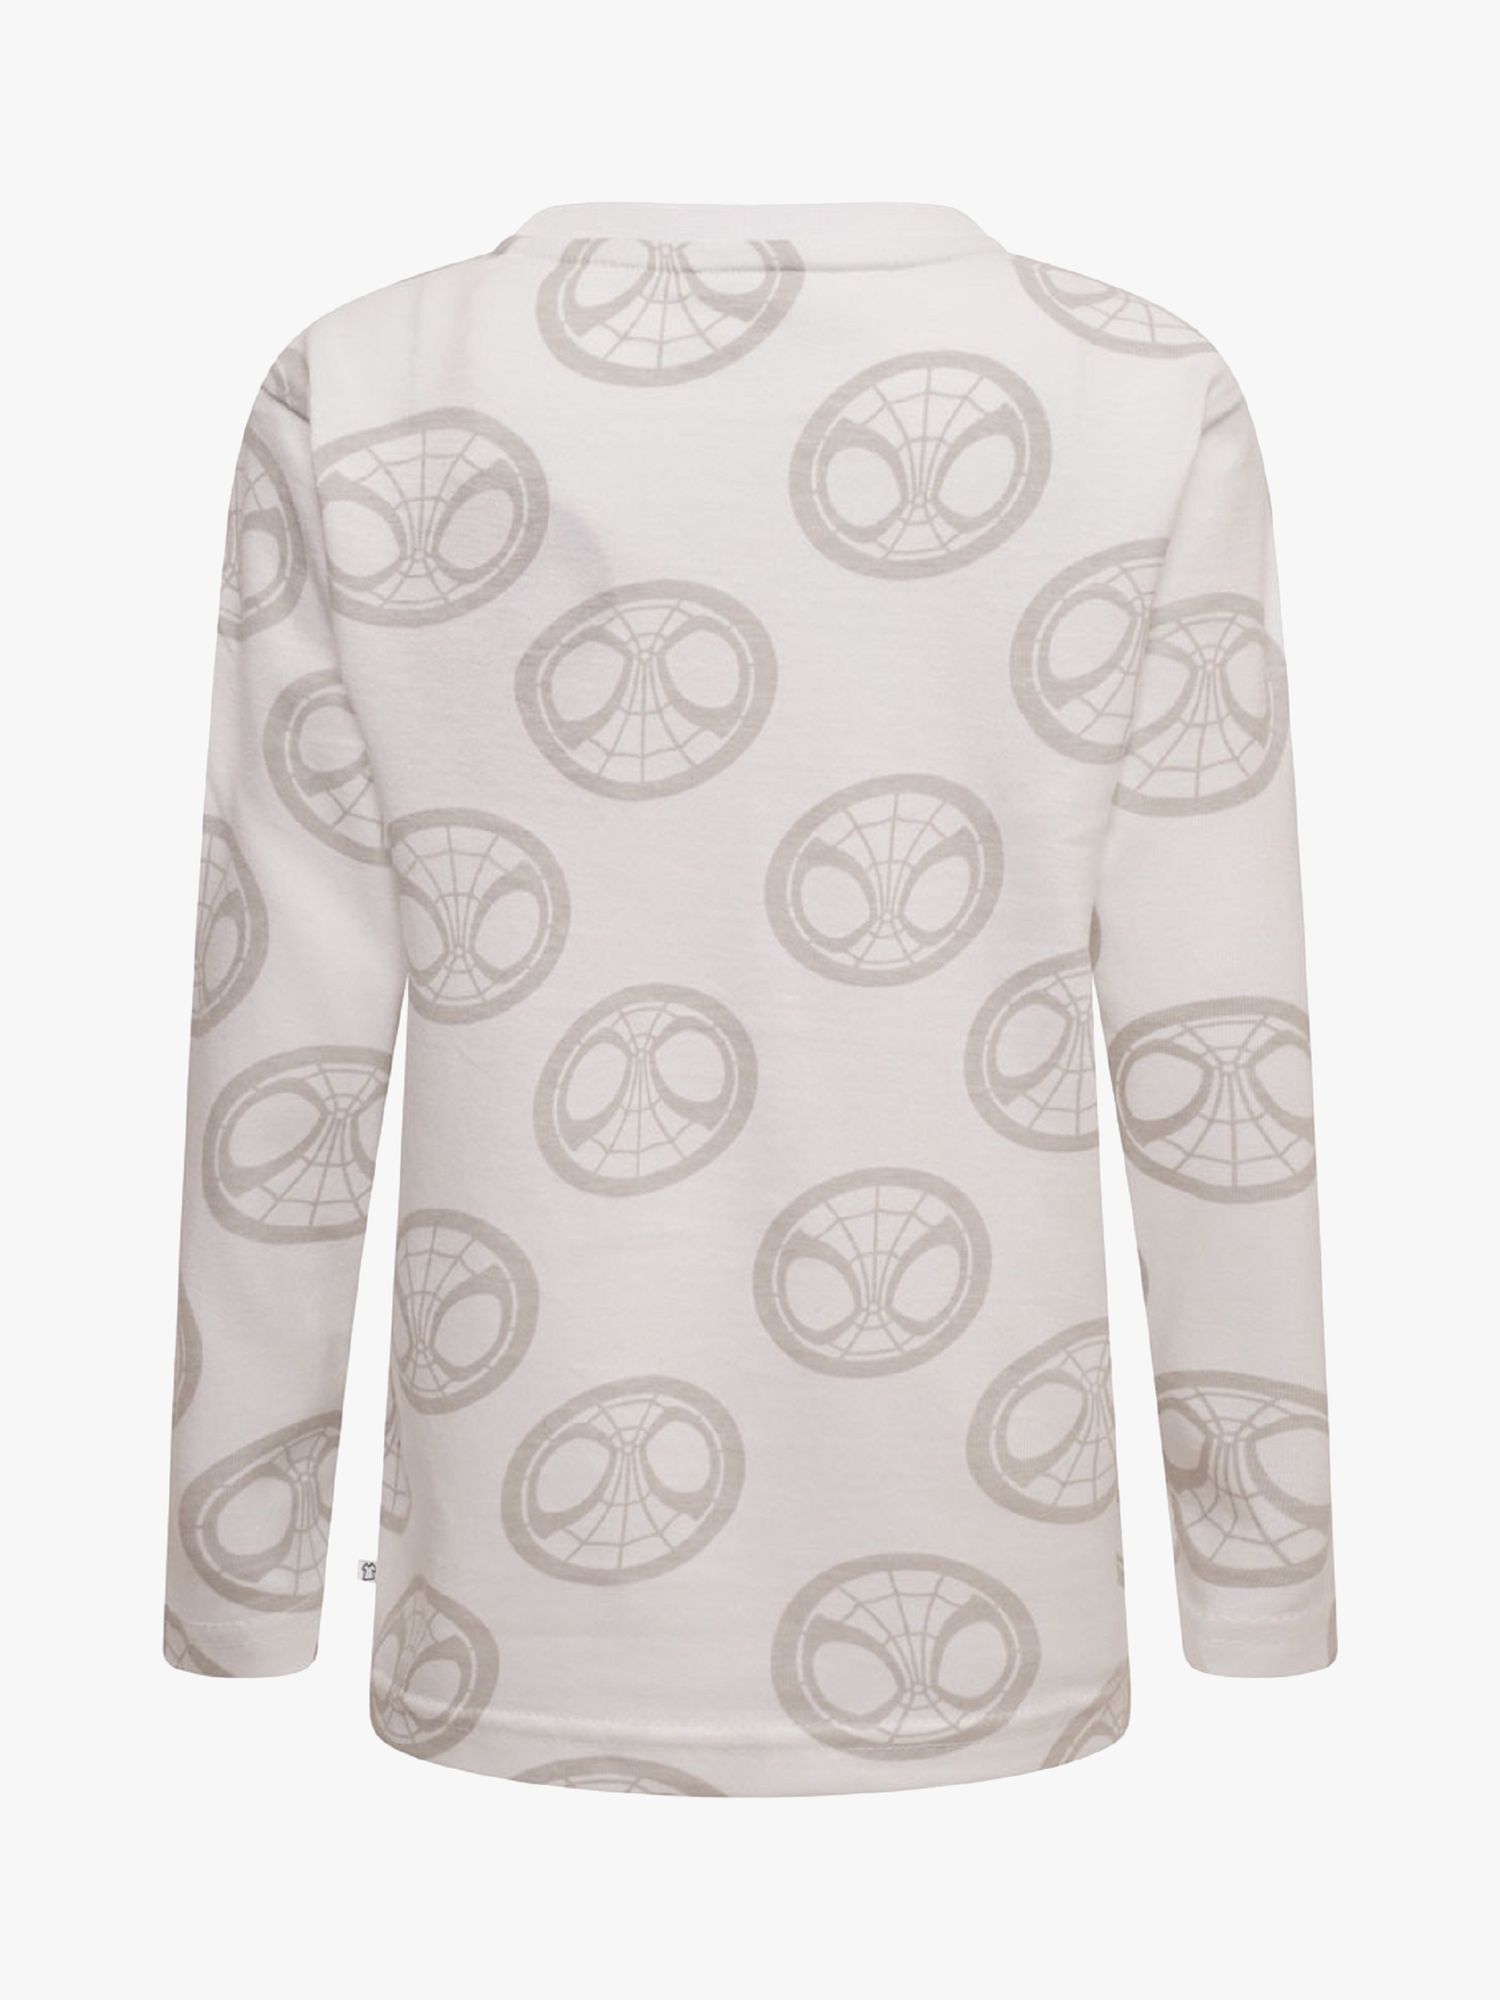 Buy Brand Threads Kids' Spiderman Long Sleeve T Shirt, White Online at johnlewis.com